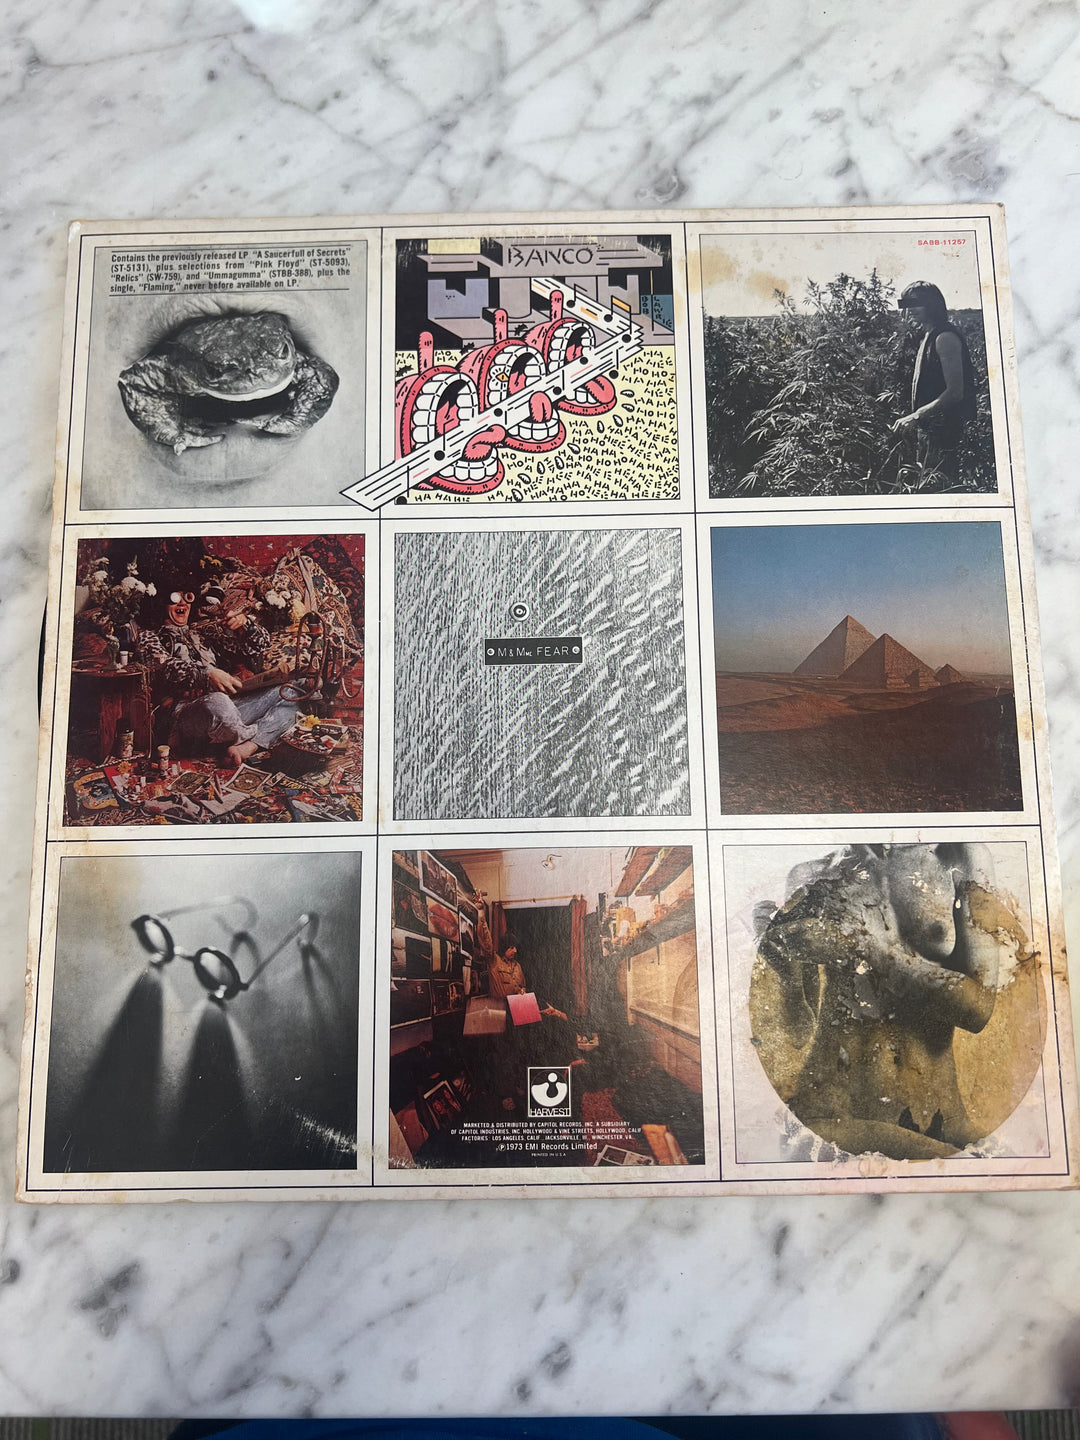 Pink Floyd - A Nice Pair - Vinyl Record